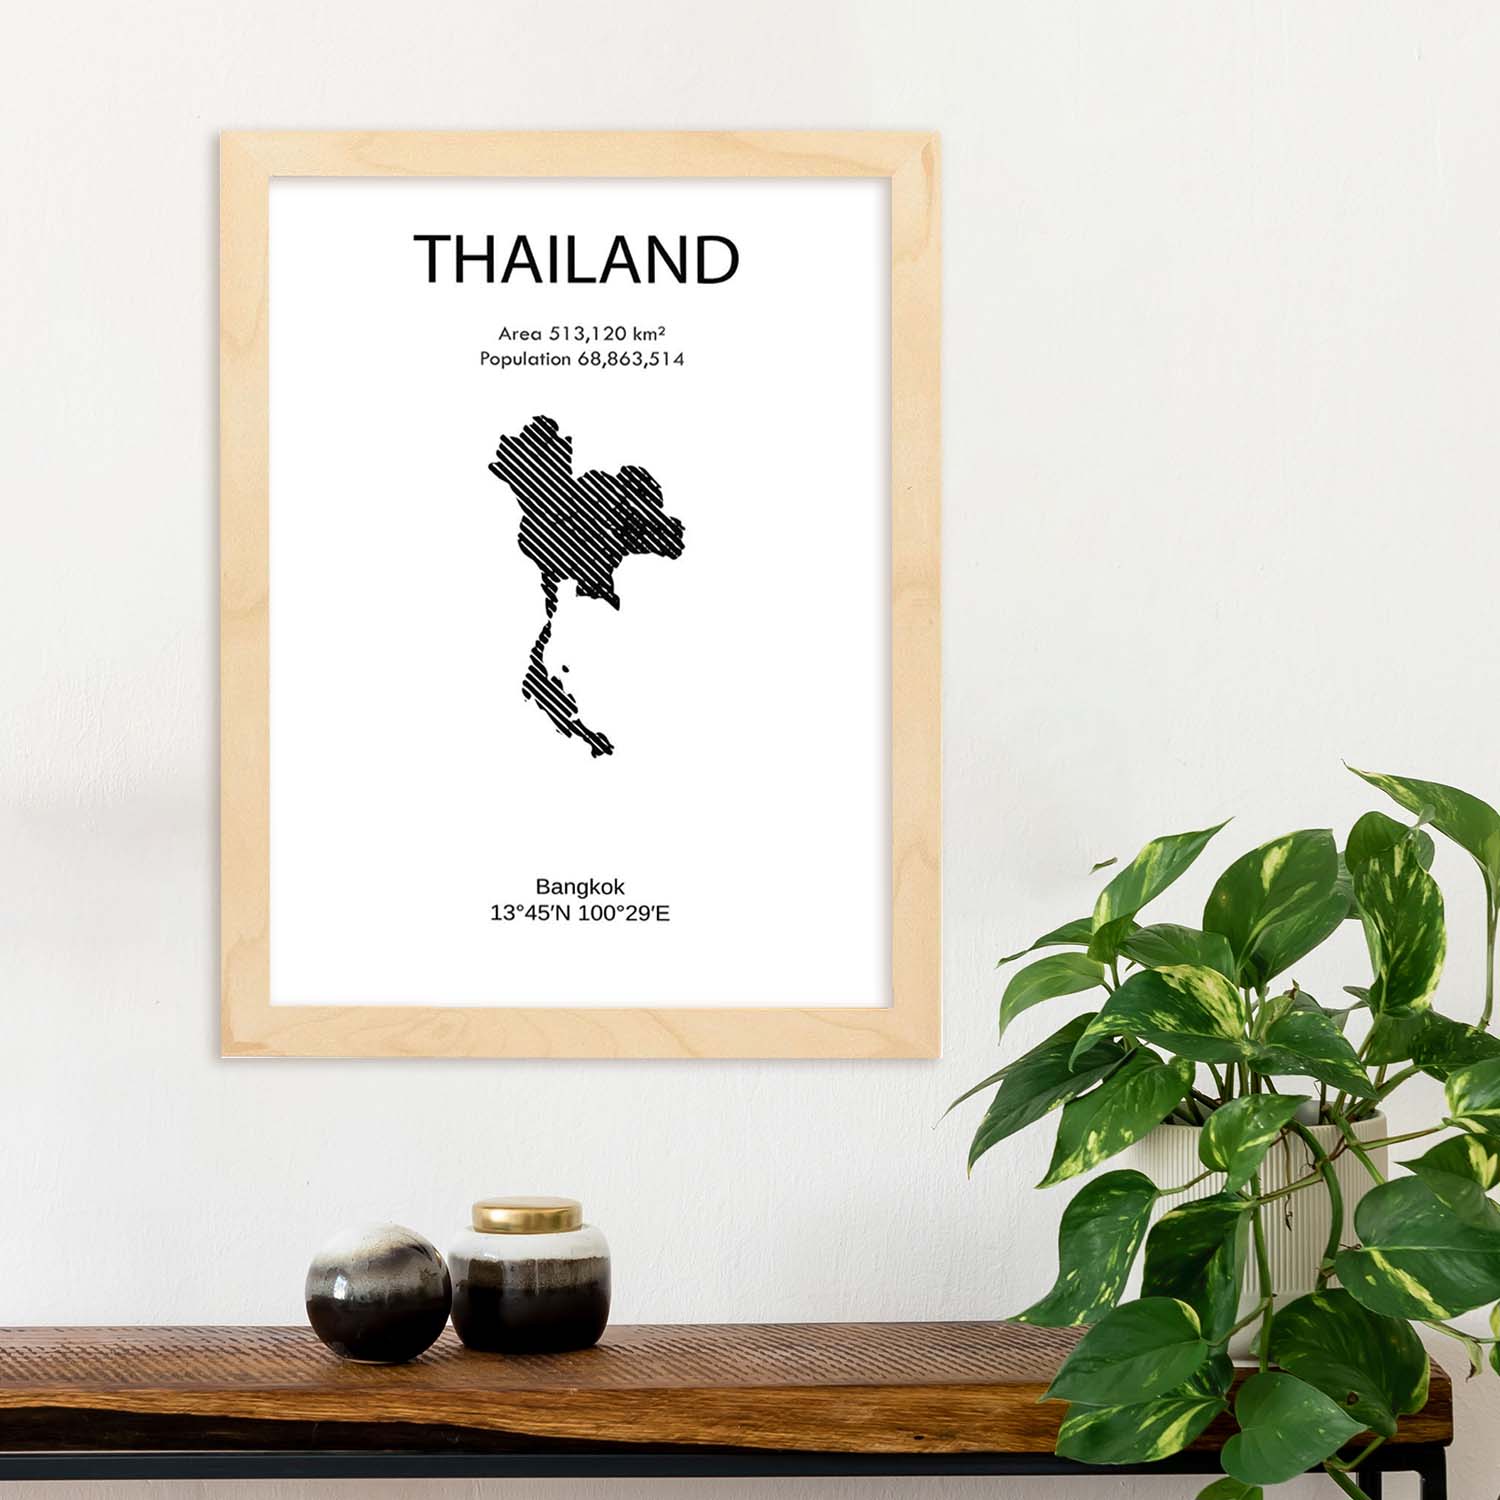 Poster de Tailandia. Láminas de paises y continentes del mundo.-Artwork-Nacnic-Nacnic Estudio SL